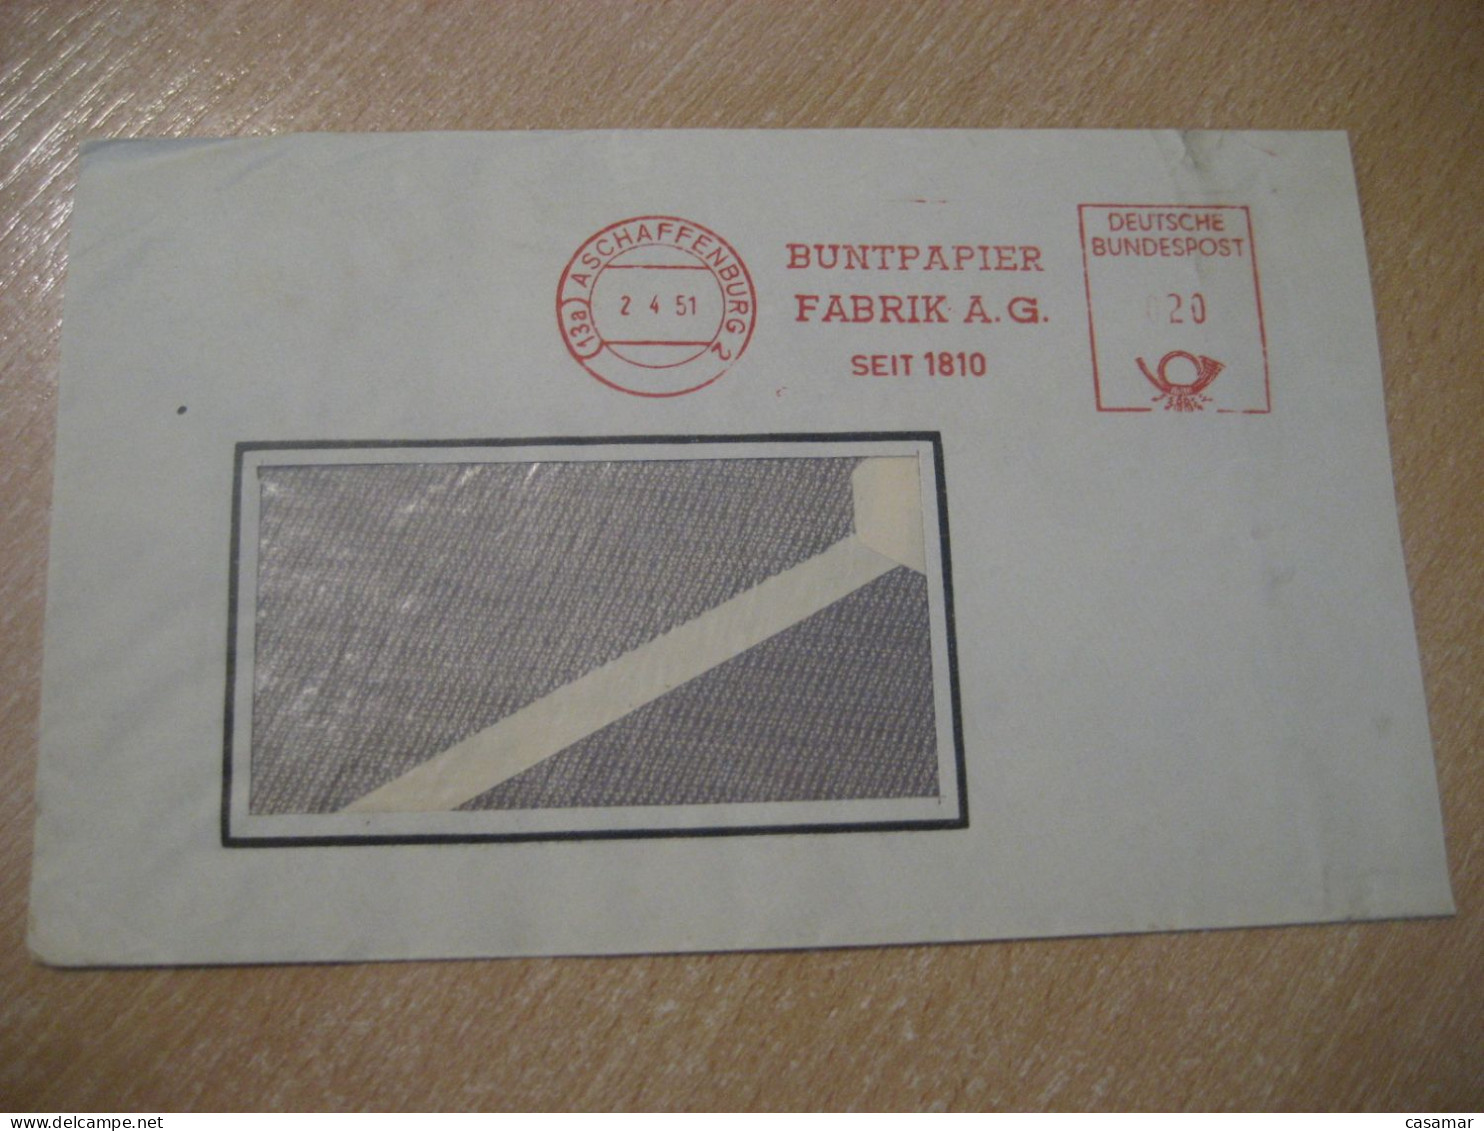 ASCHAFFENBURG 1951 Buntpapier Fabrik A.G. Meter Mail Cancel Cover GERMANY - Briefe U. Dokumente